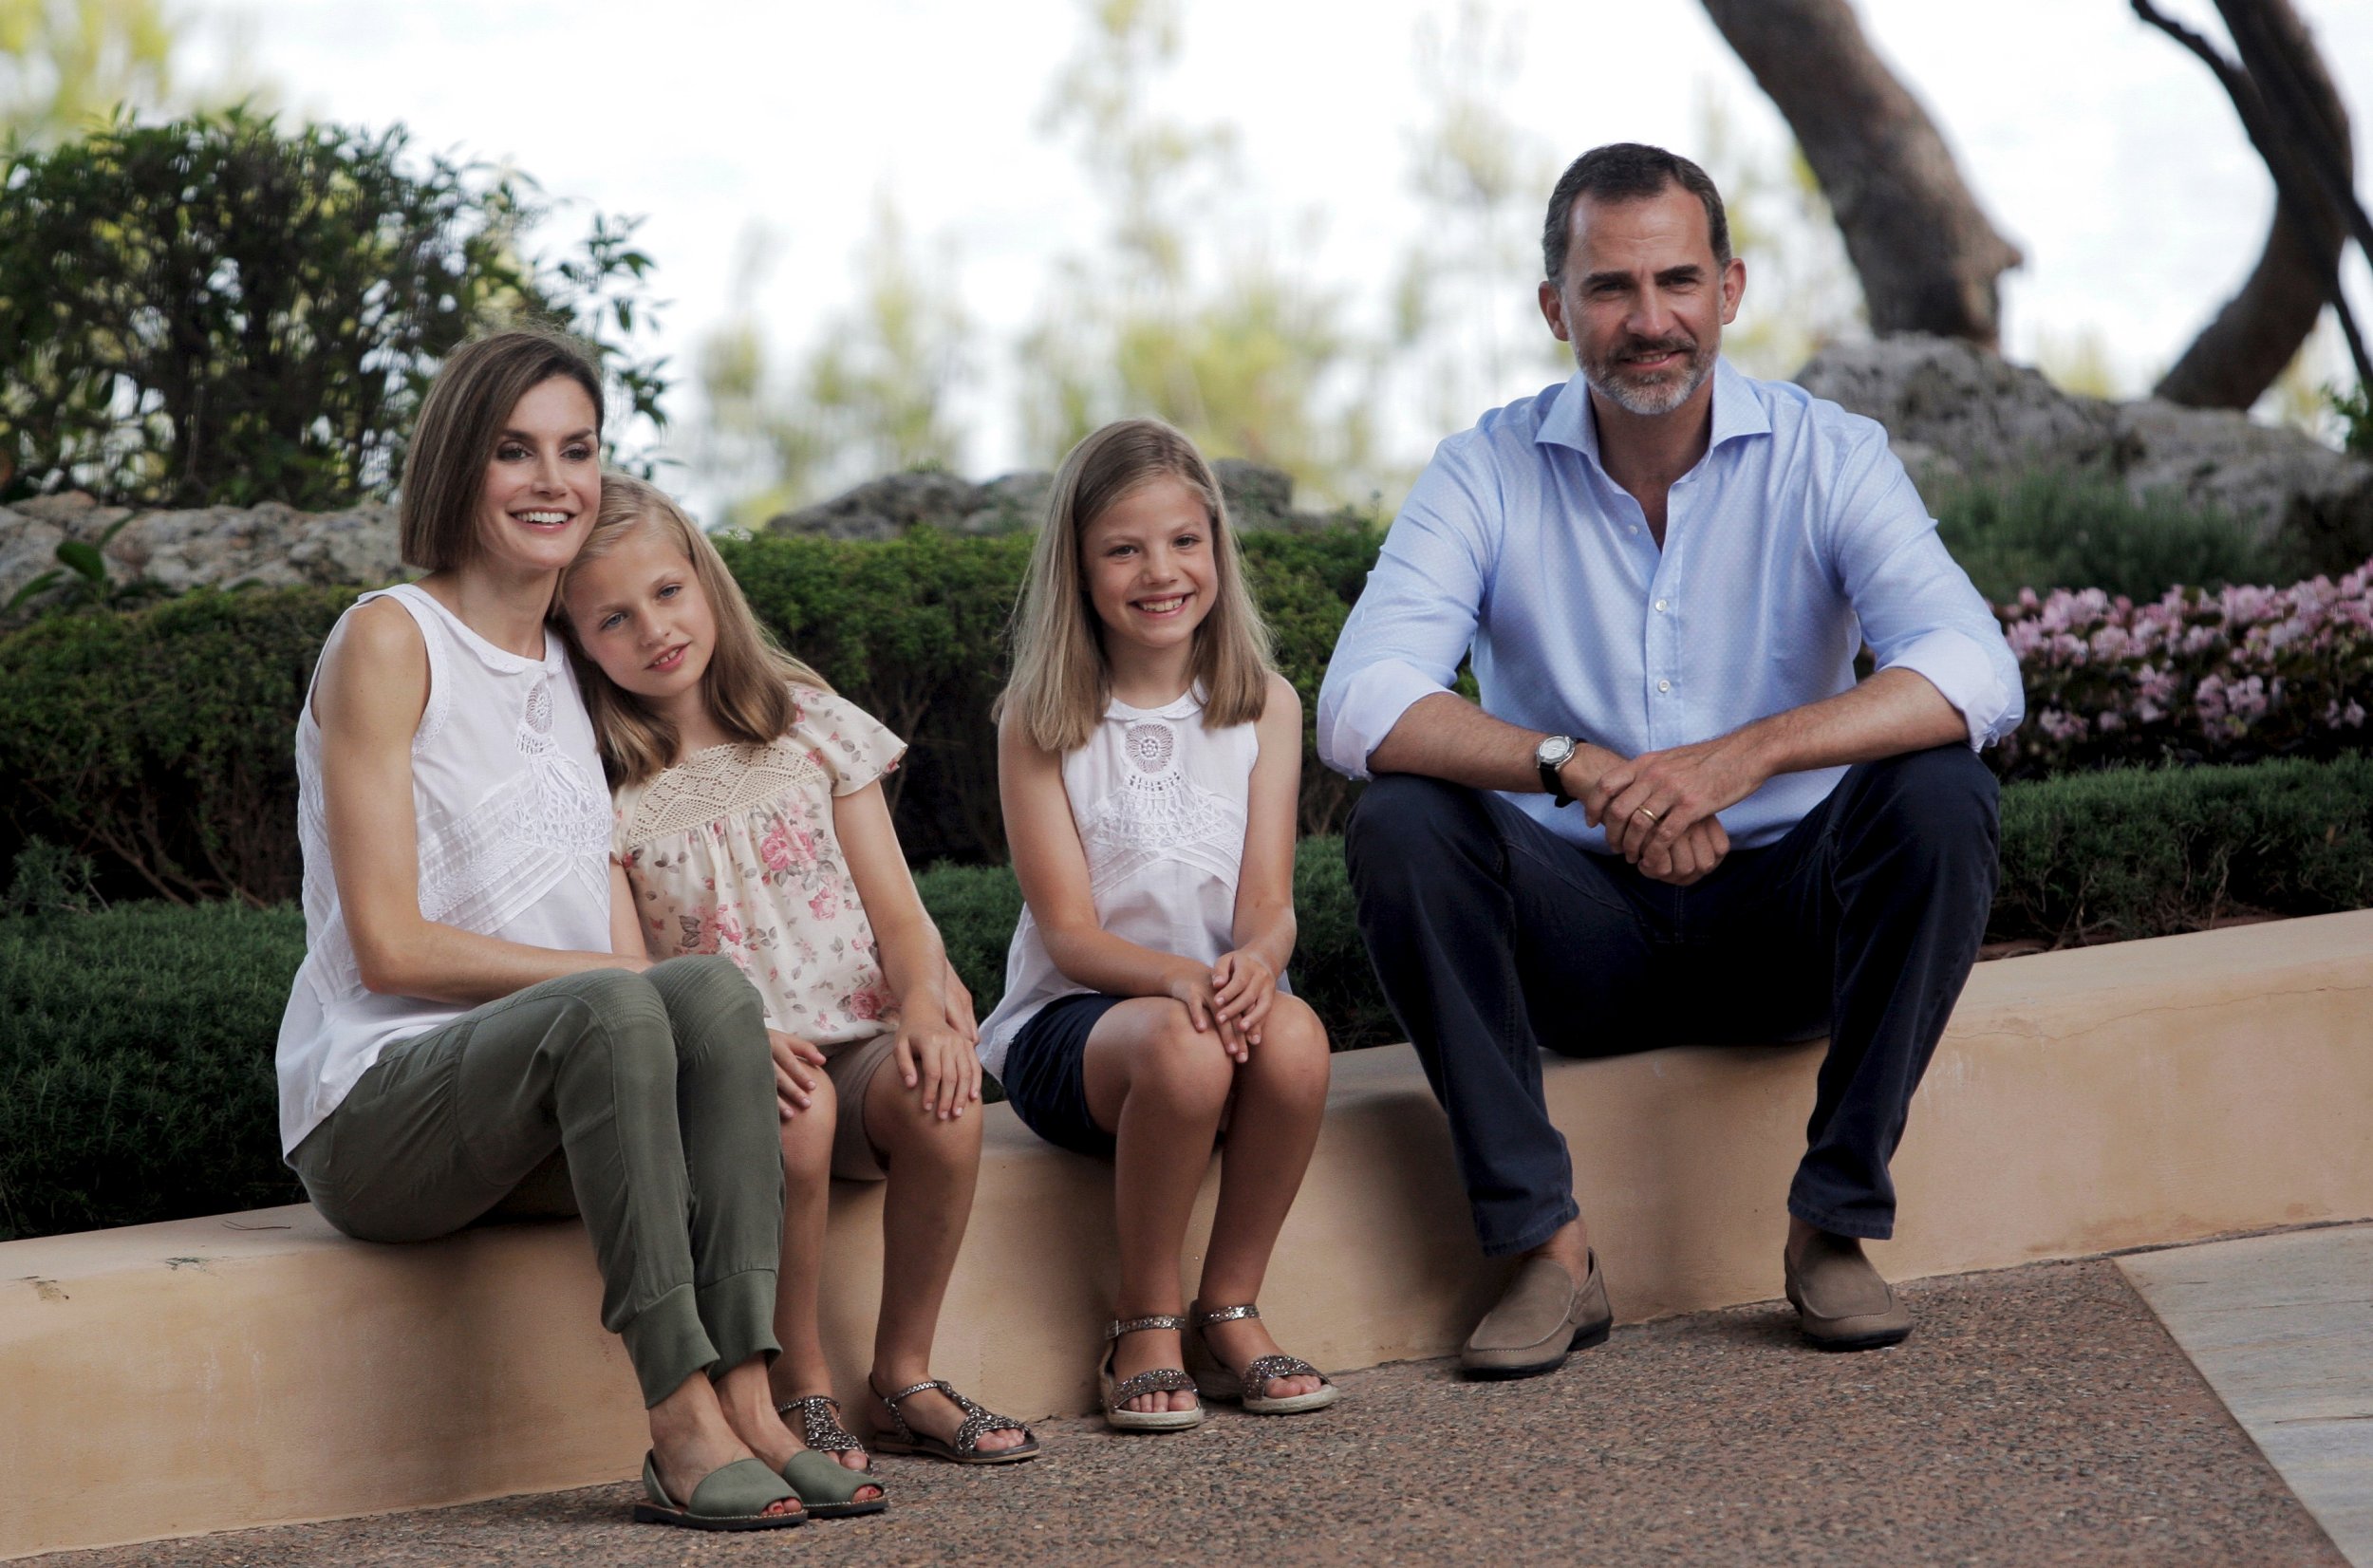 Queen Letizia's daughter Leonor protected in dad's statement